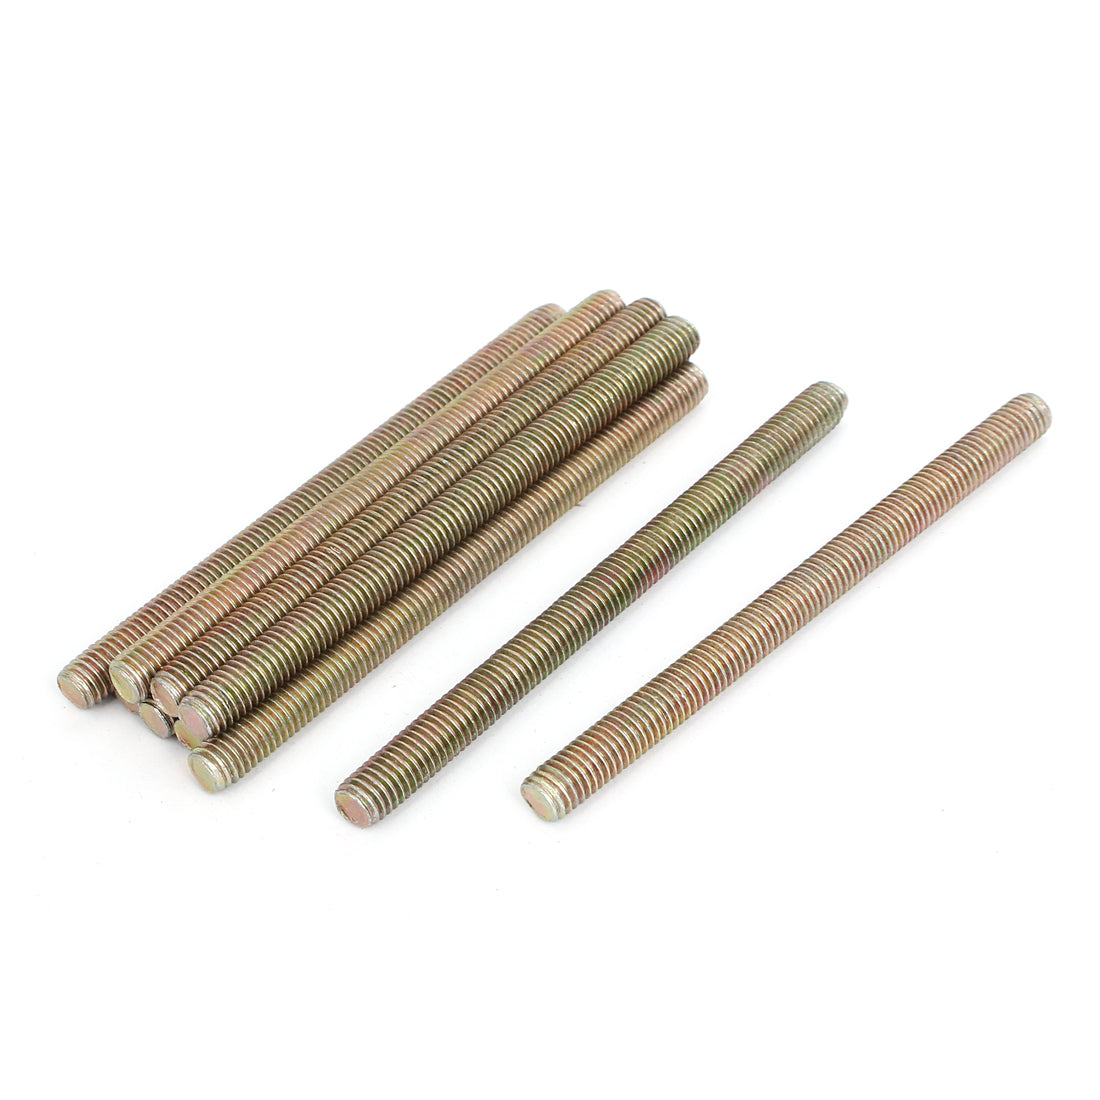 uxcell Uxcell 1.25mm Pitch M8 x 110mm Male Threaded All Thread Rod Bar Stud Bronze Tone 10Pcs